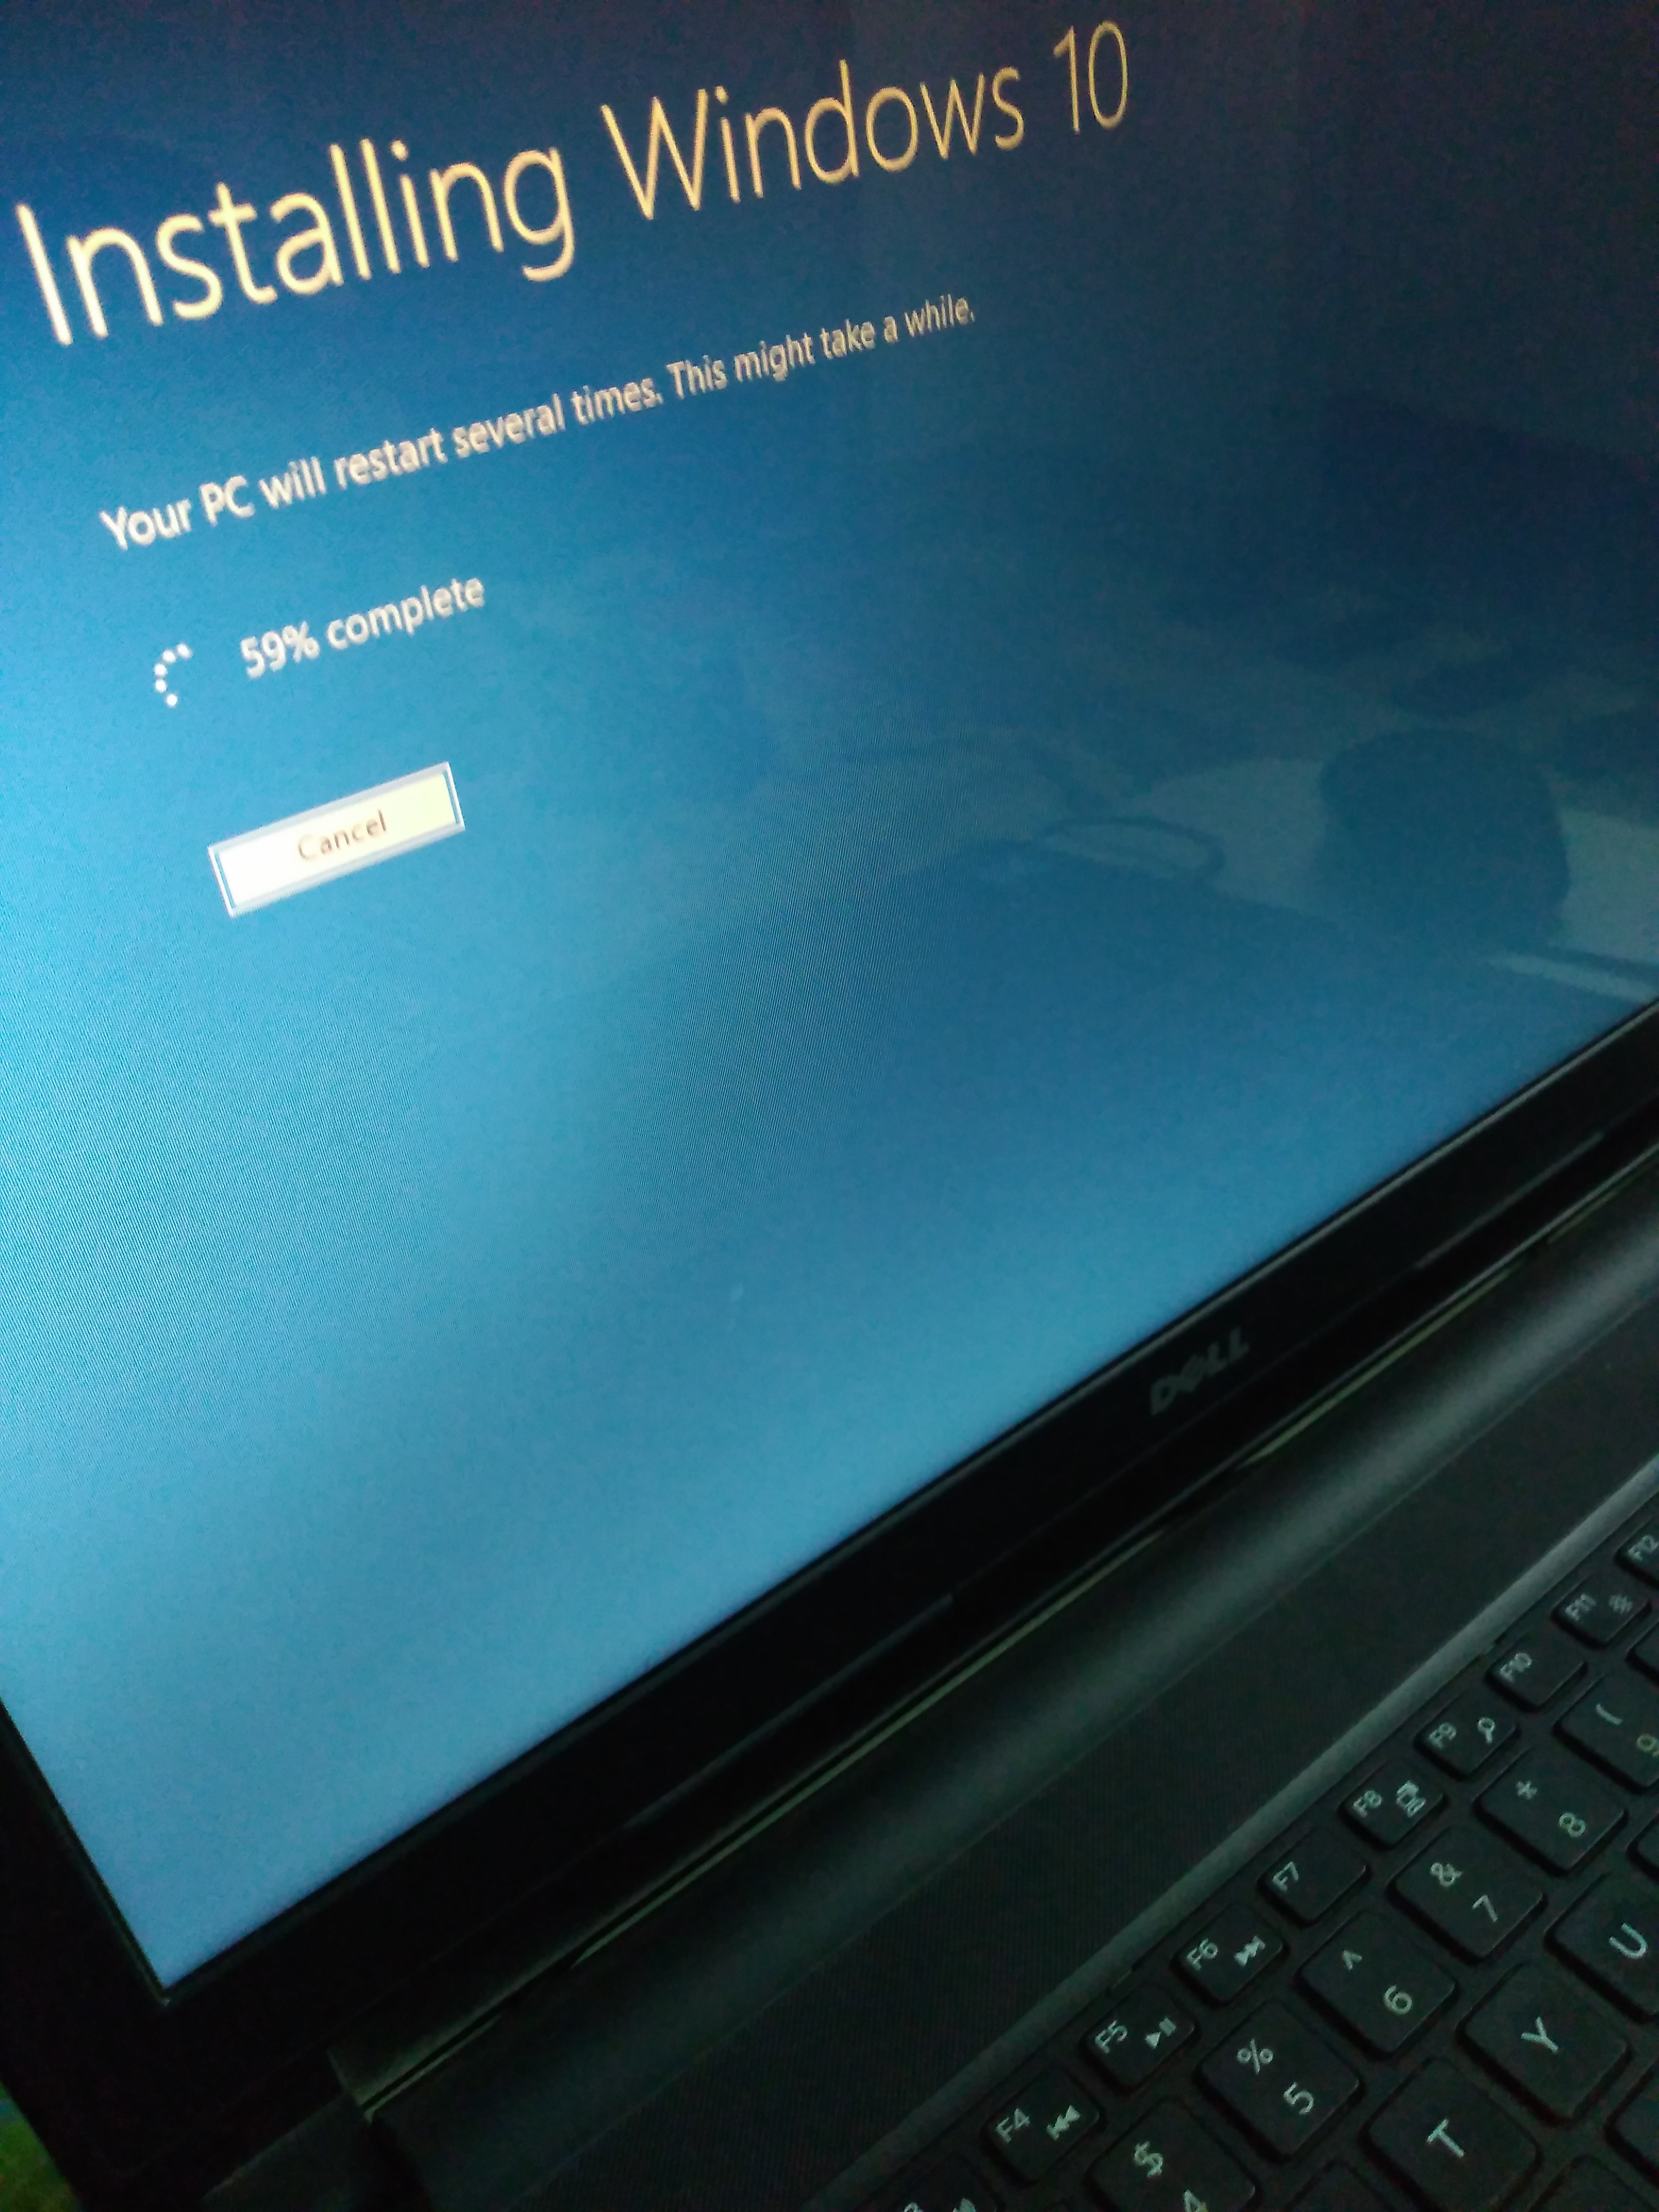 windows 10 1903 update is struck at 59% - Microsoft Community